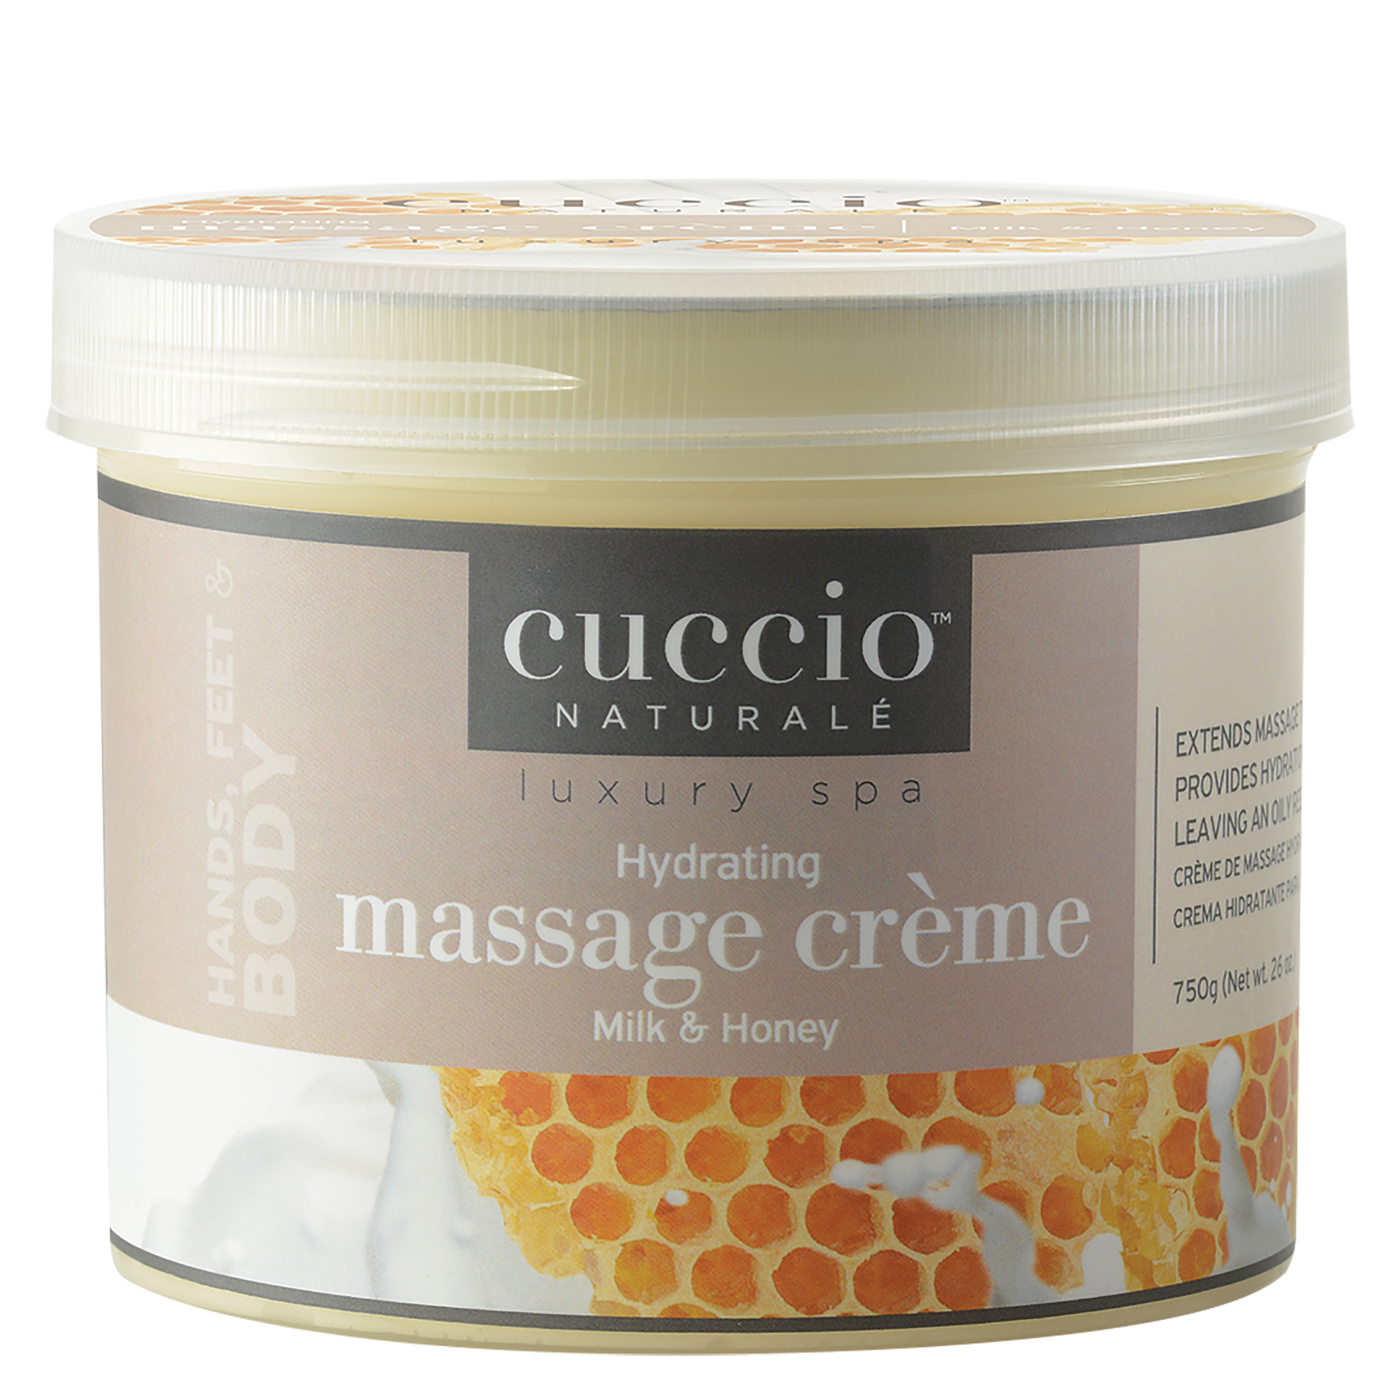 Massage Crème - Milk & Honey - 26 oz.